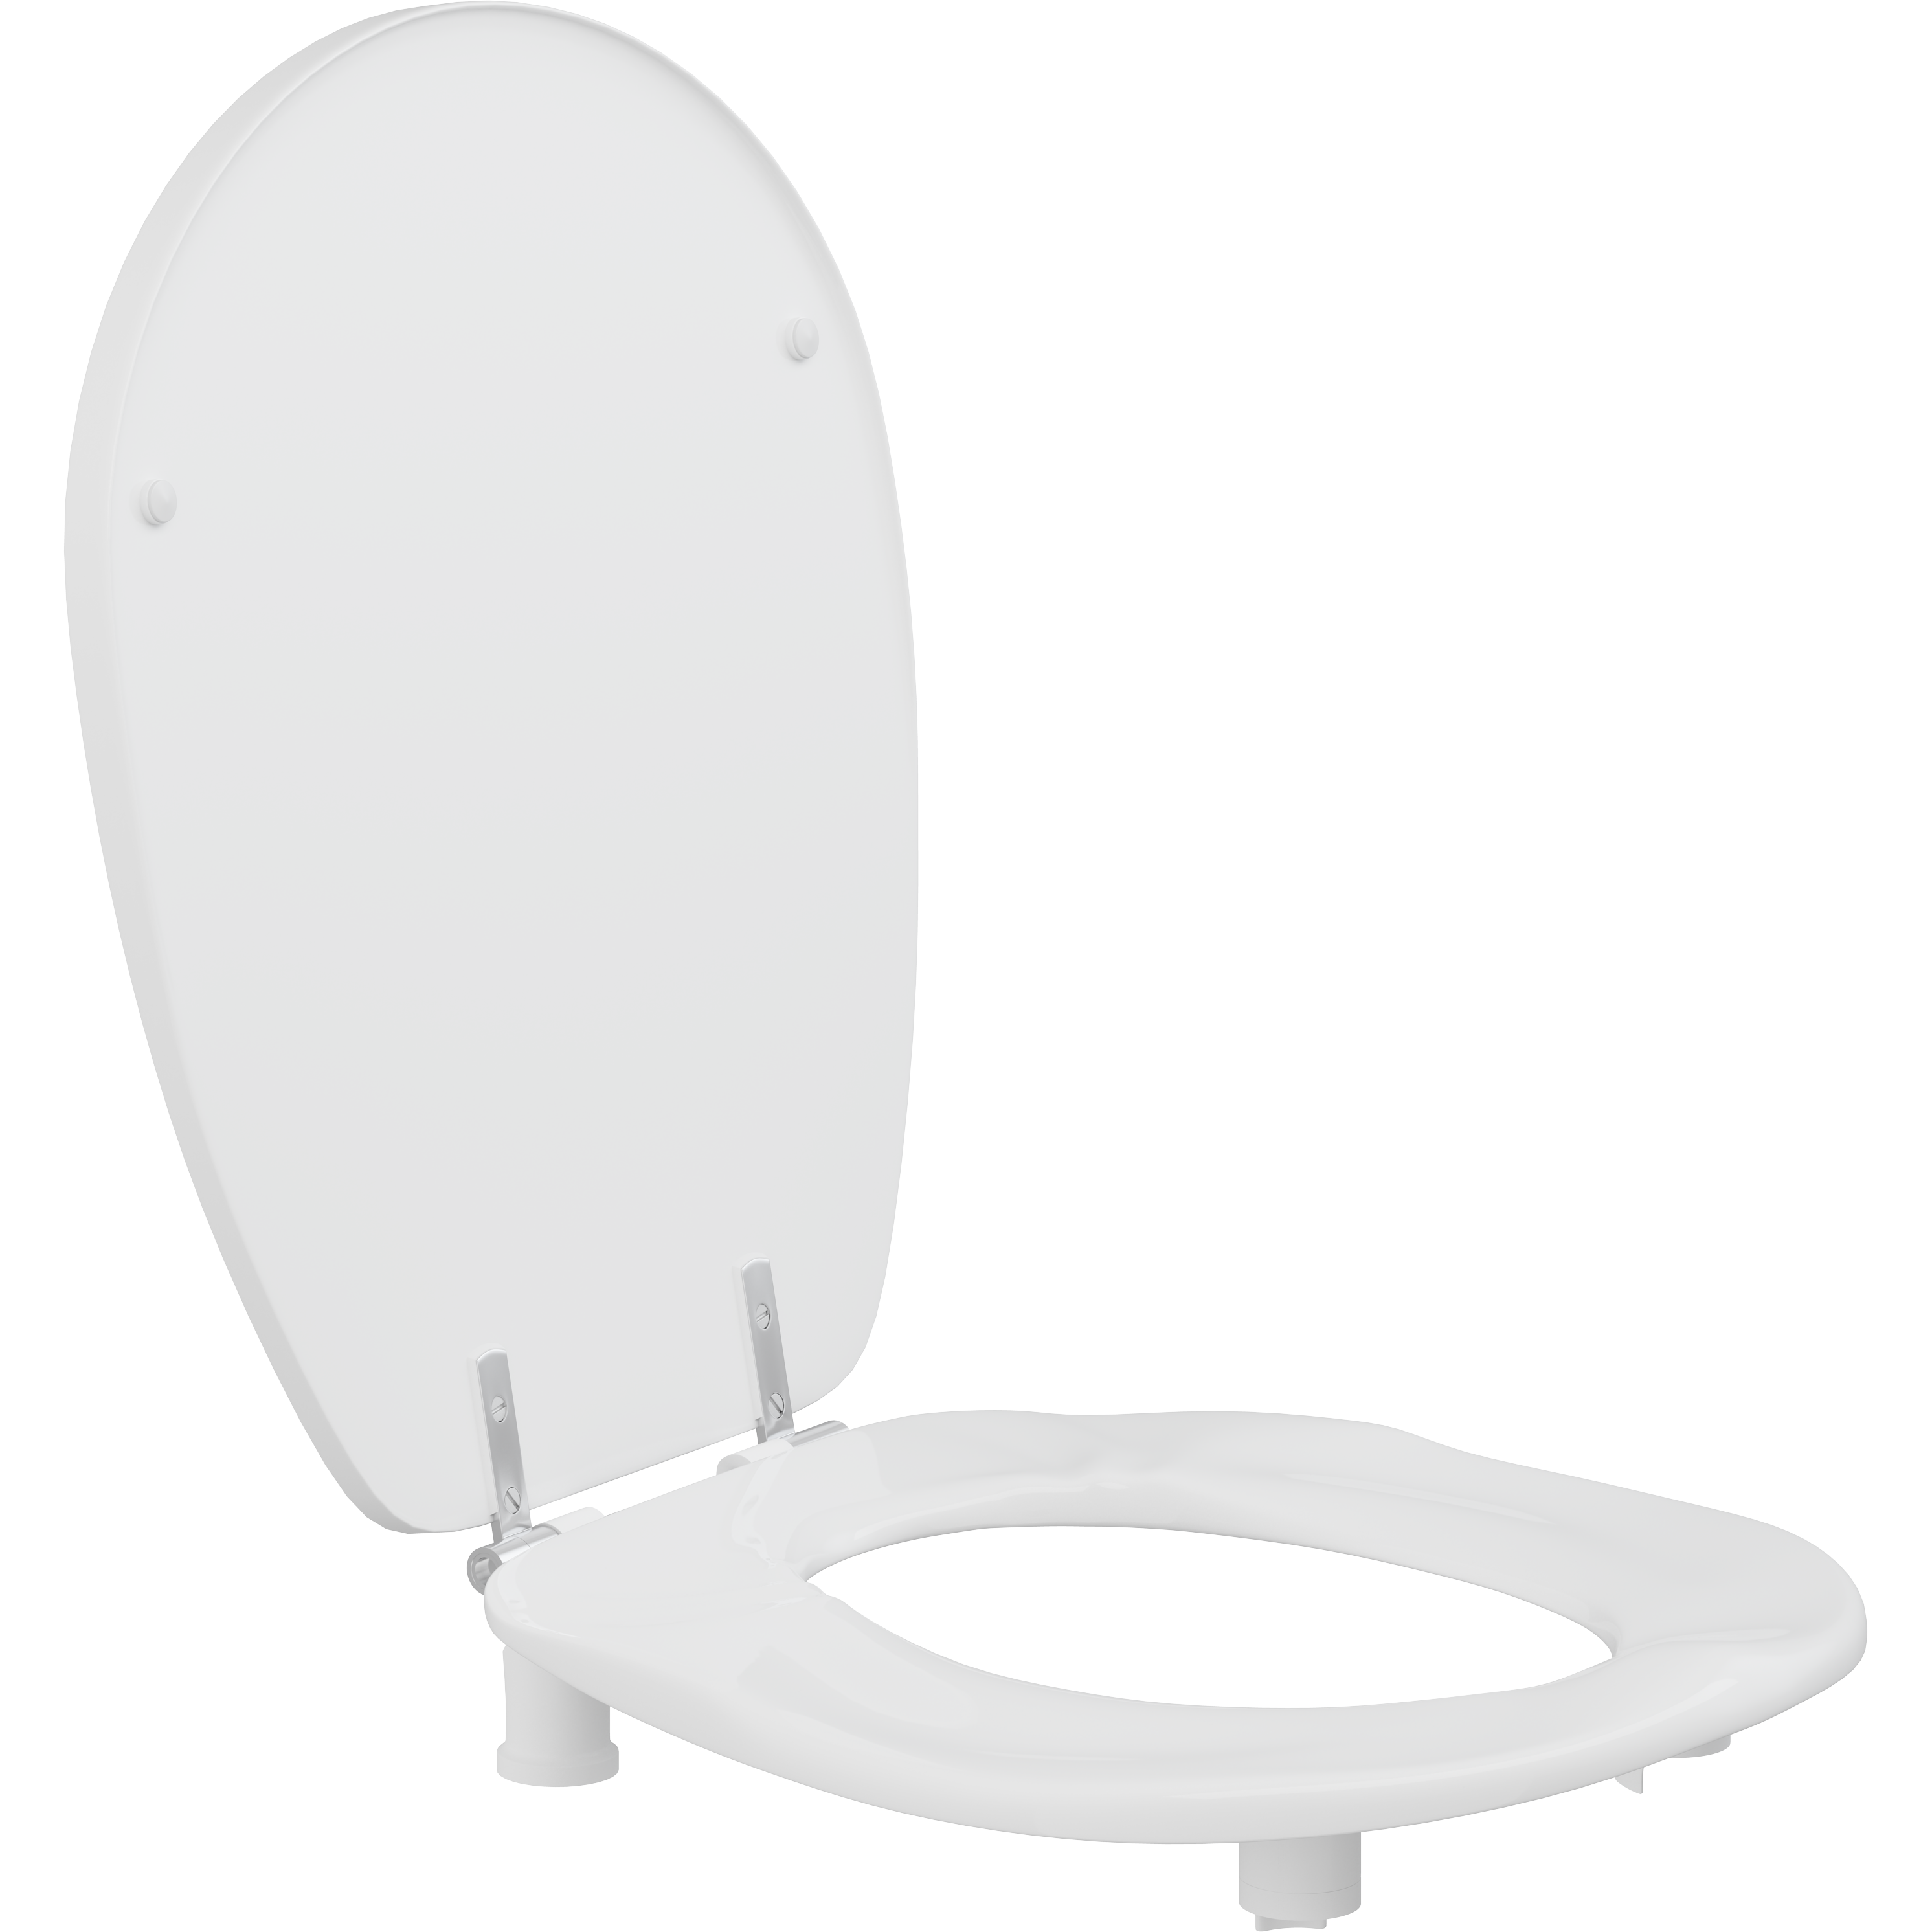 Toilet seat Ergosit with cover, 50 mm raised